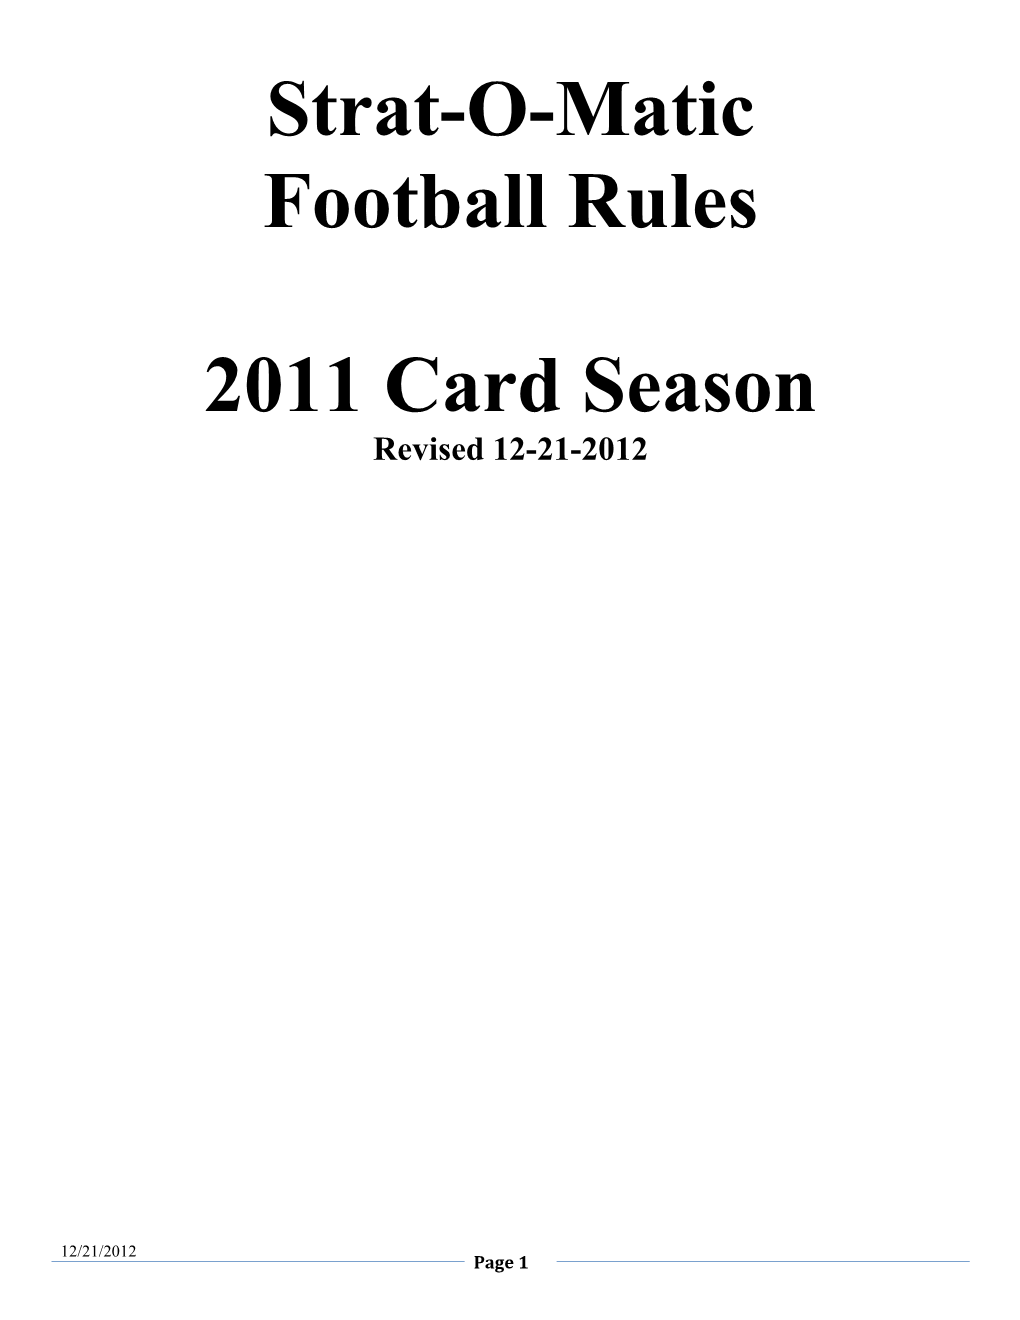 Strat-O-Matic Football Rules 2011 Card Season